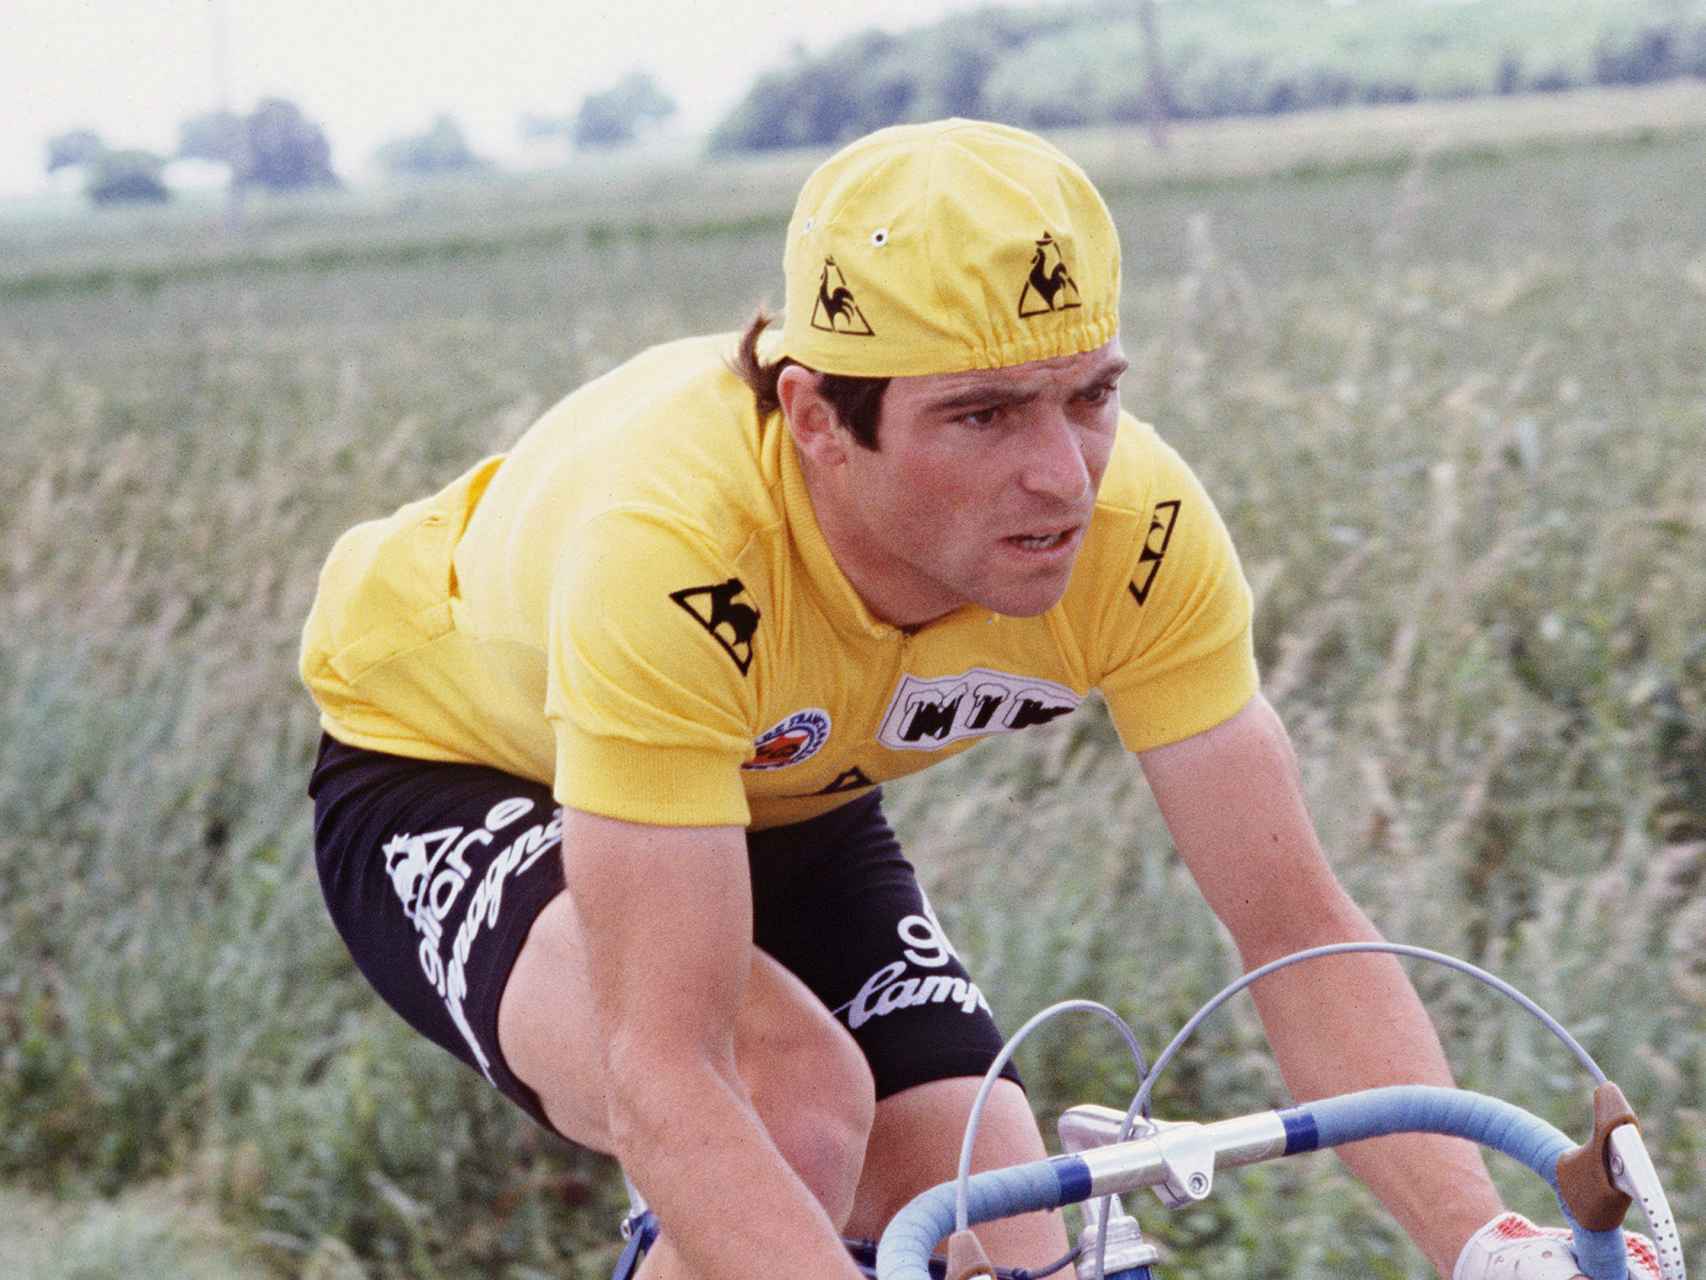 Bernard Hinault en un Tour de Francia.